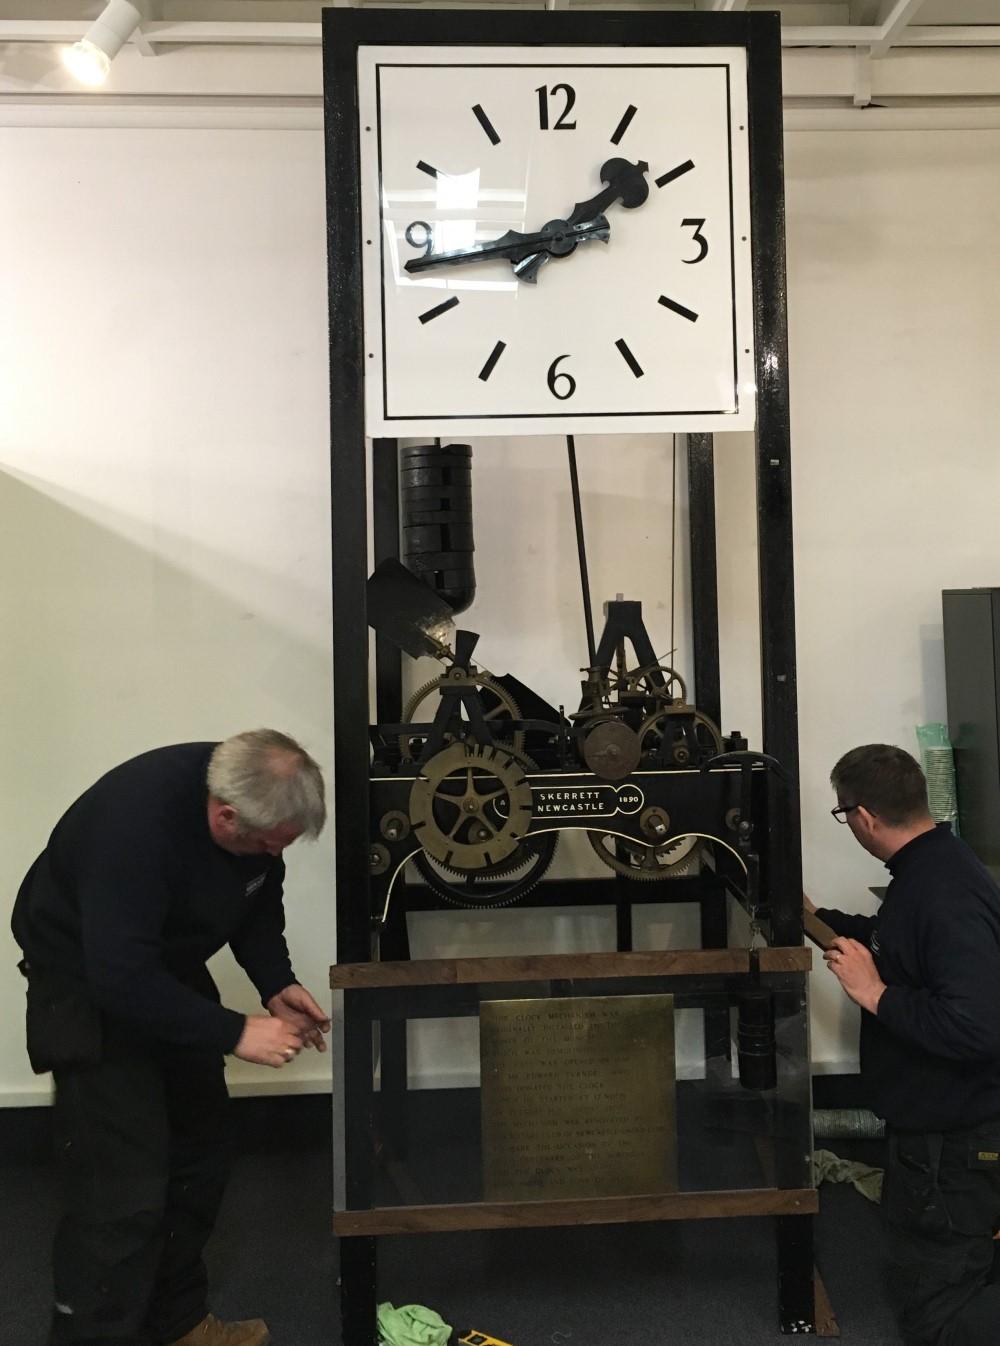 Muncipal hall clock at brampton being serviced